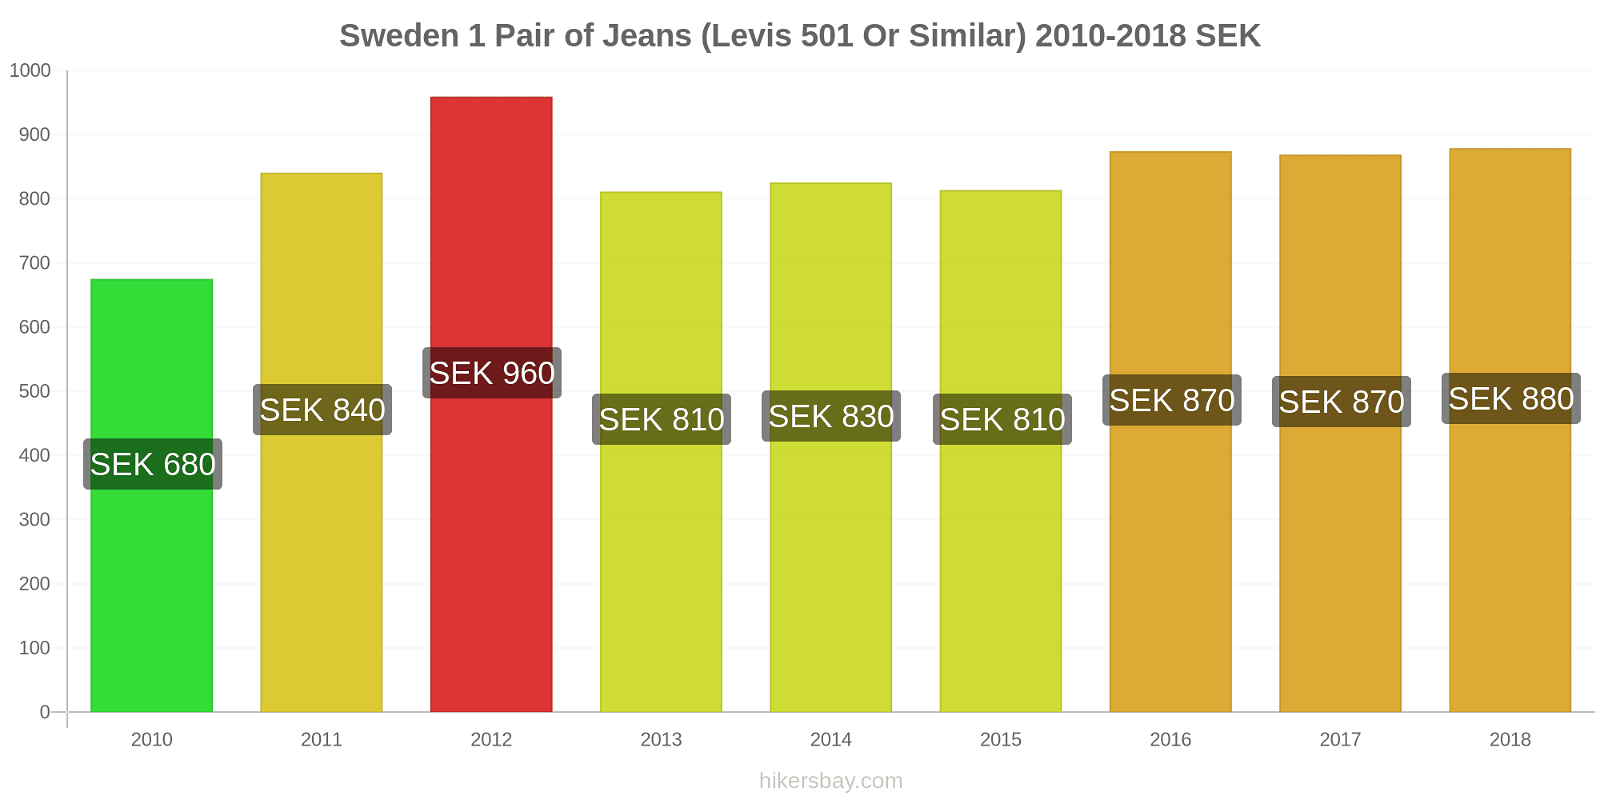 Sweden price changes 1 pair of jeans (Levis 501 or similar) hikersbay.com